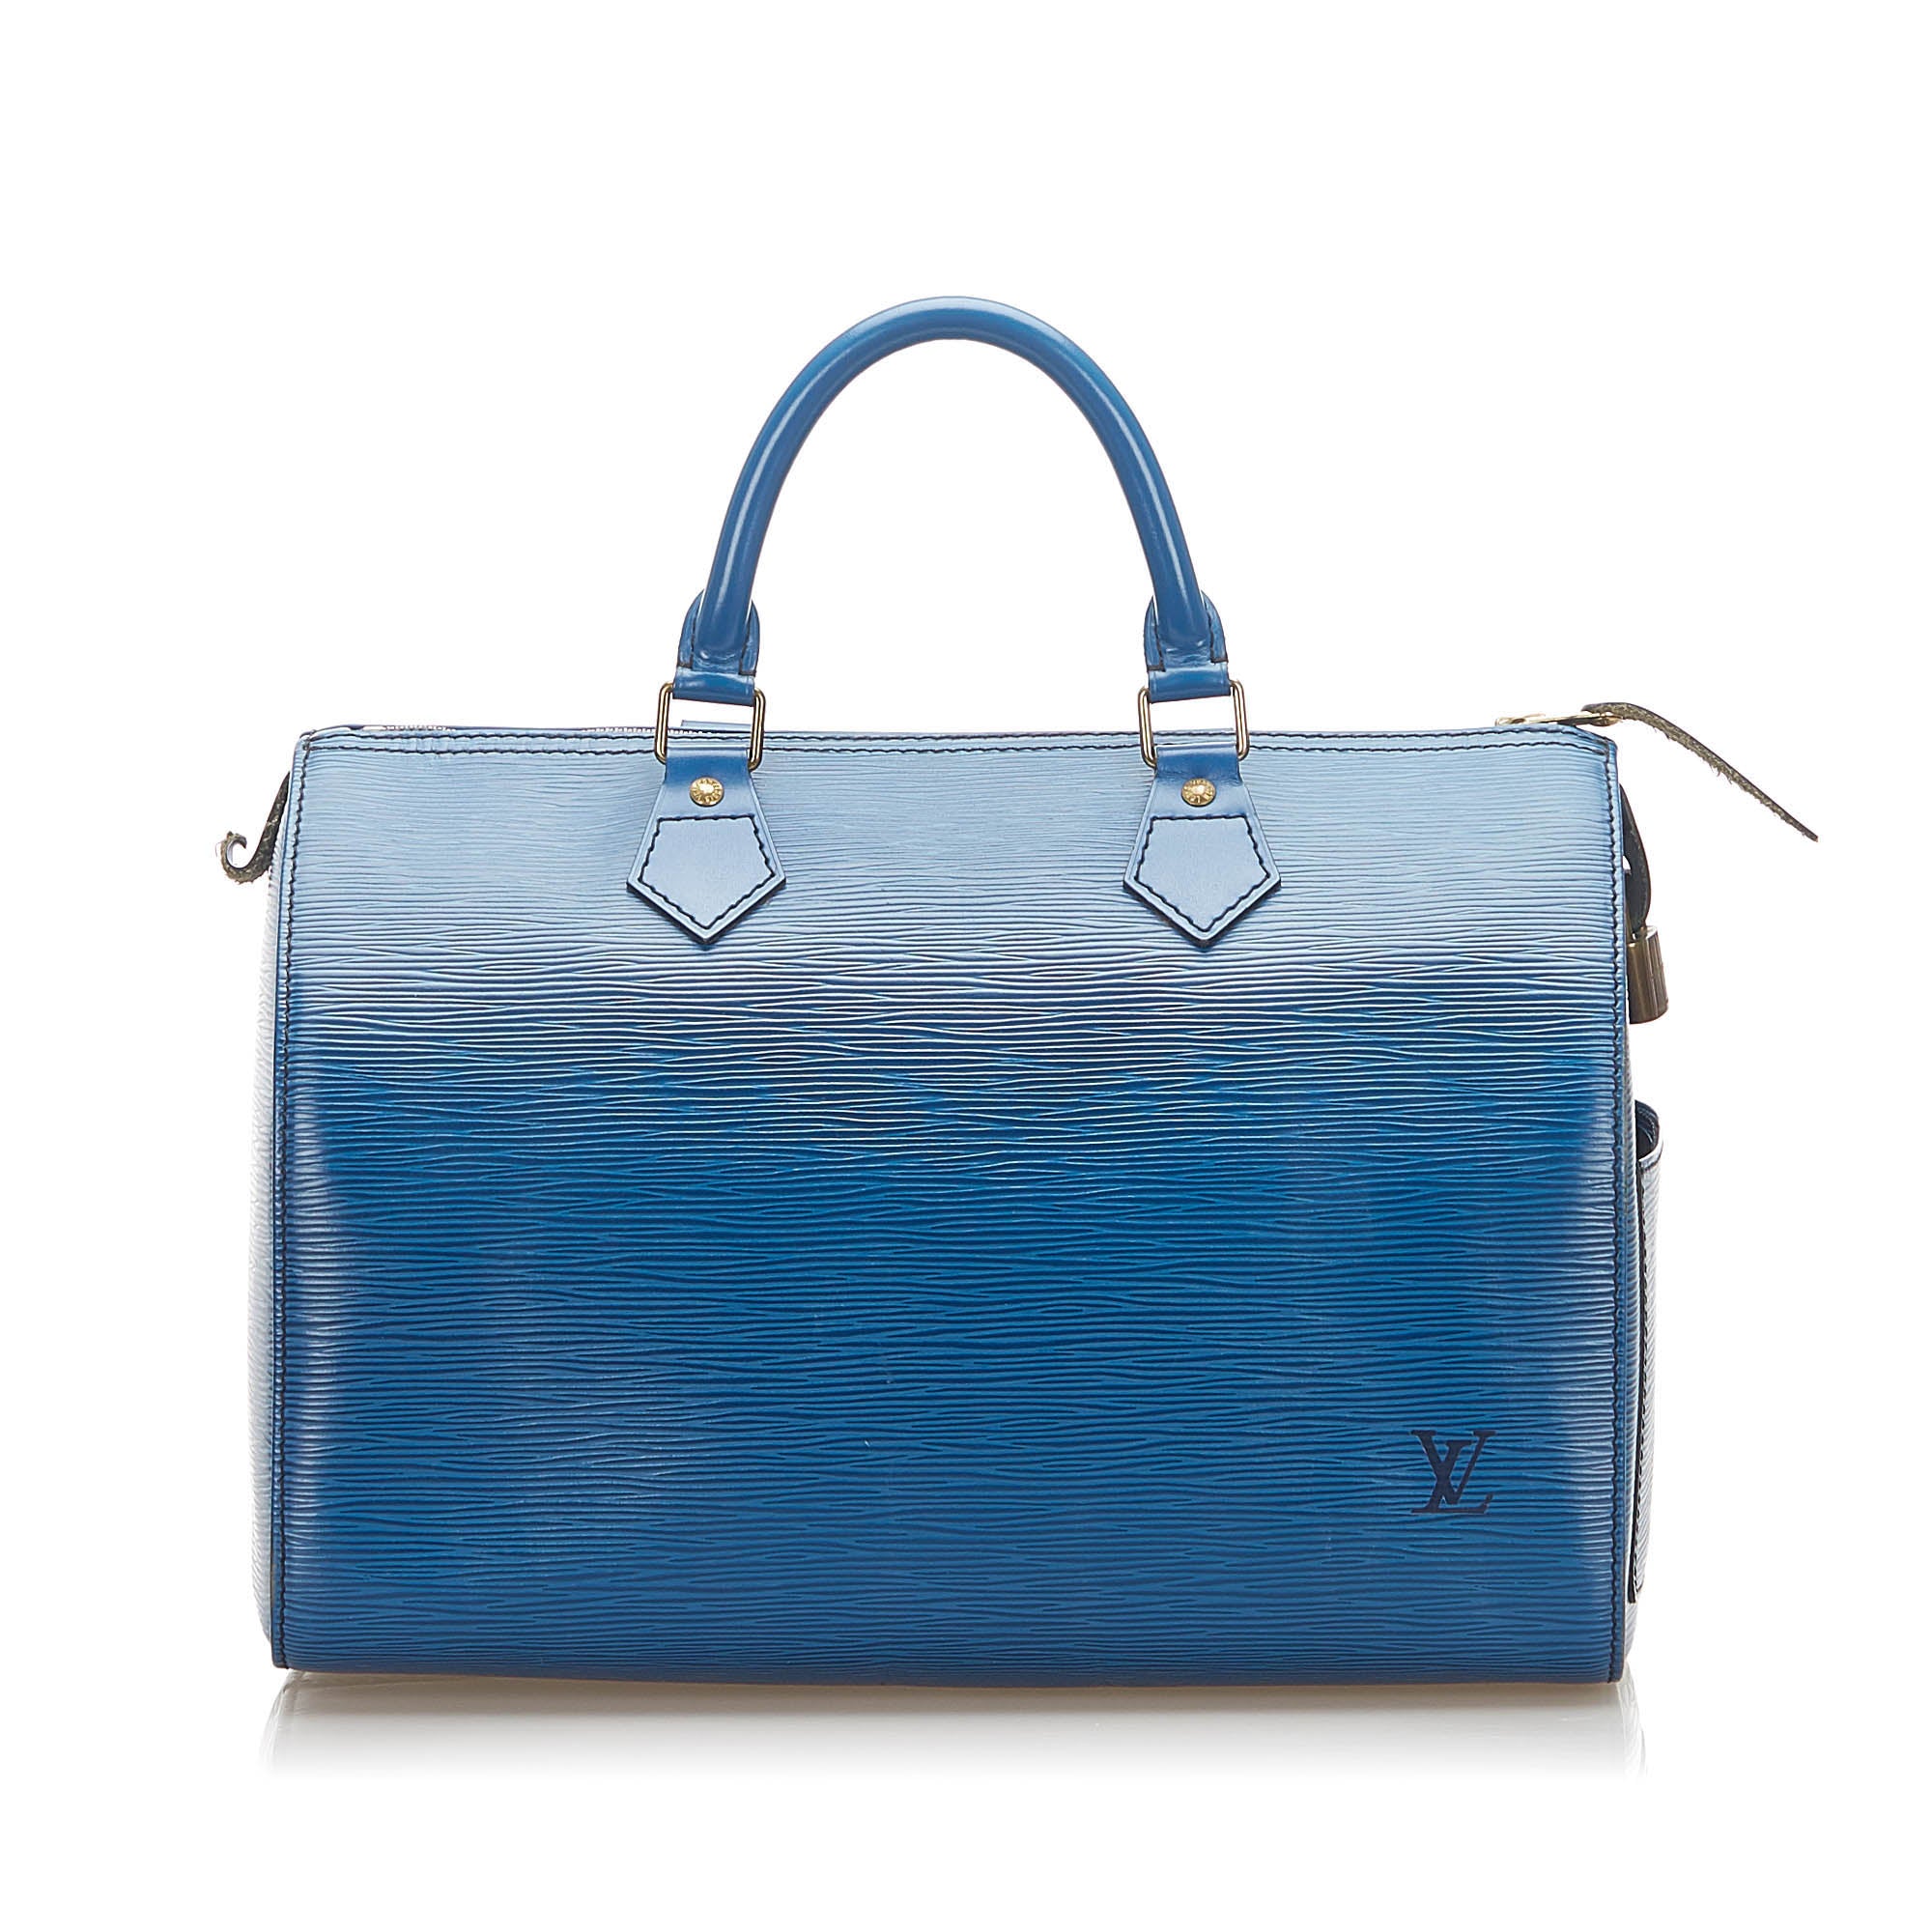 Preloved Louis Vuitton Blue Epi Speedy 30 Bag VI0932 060623